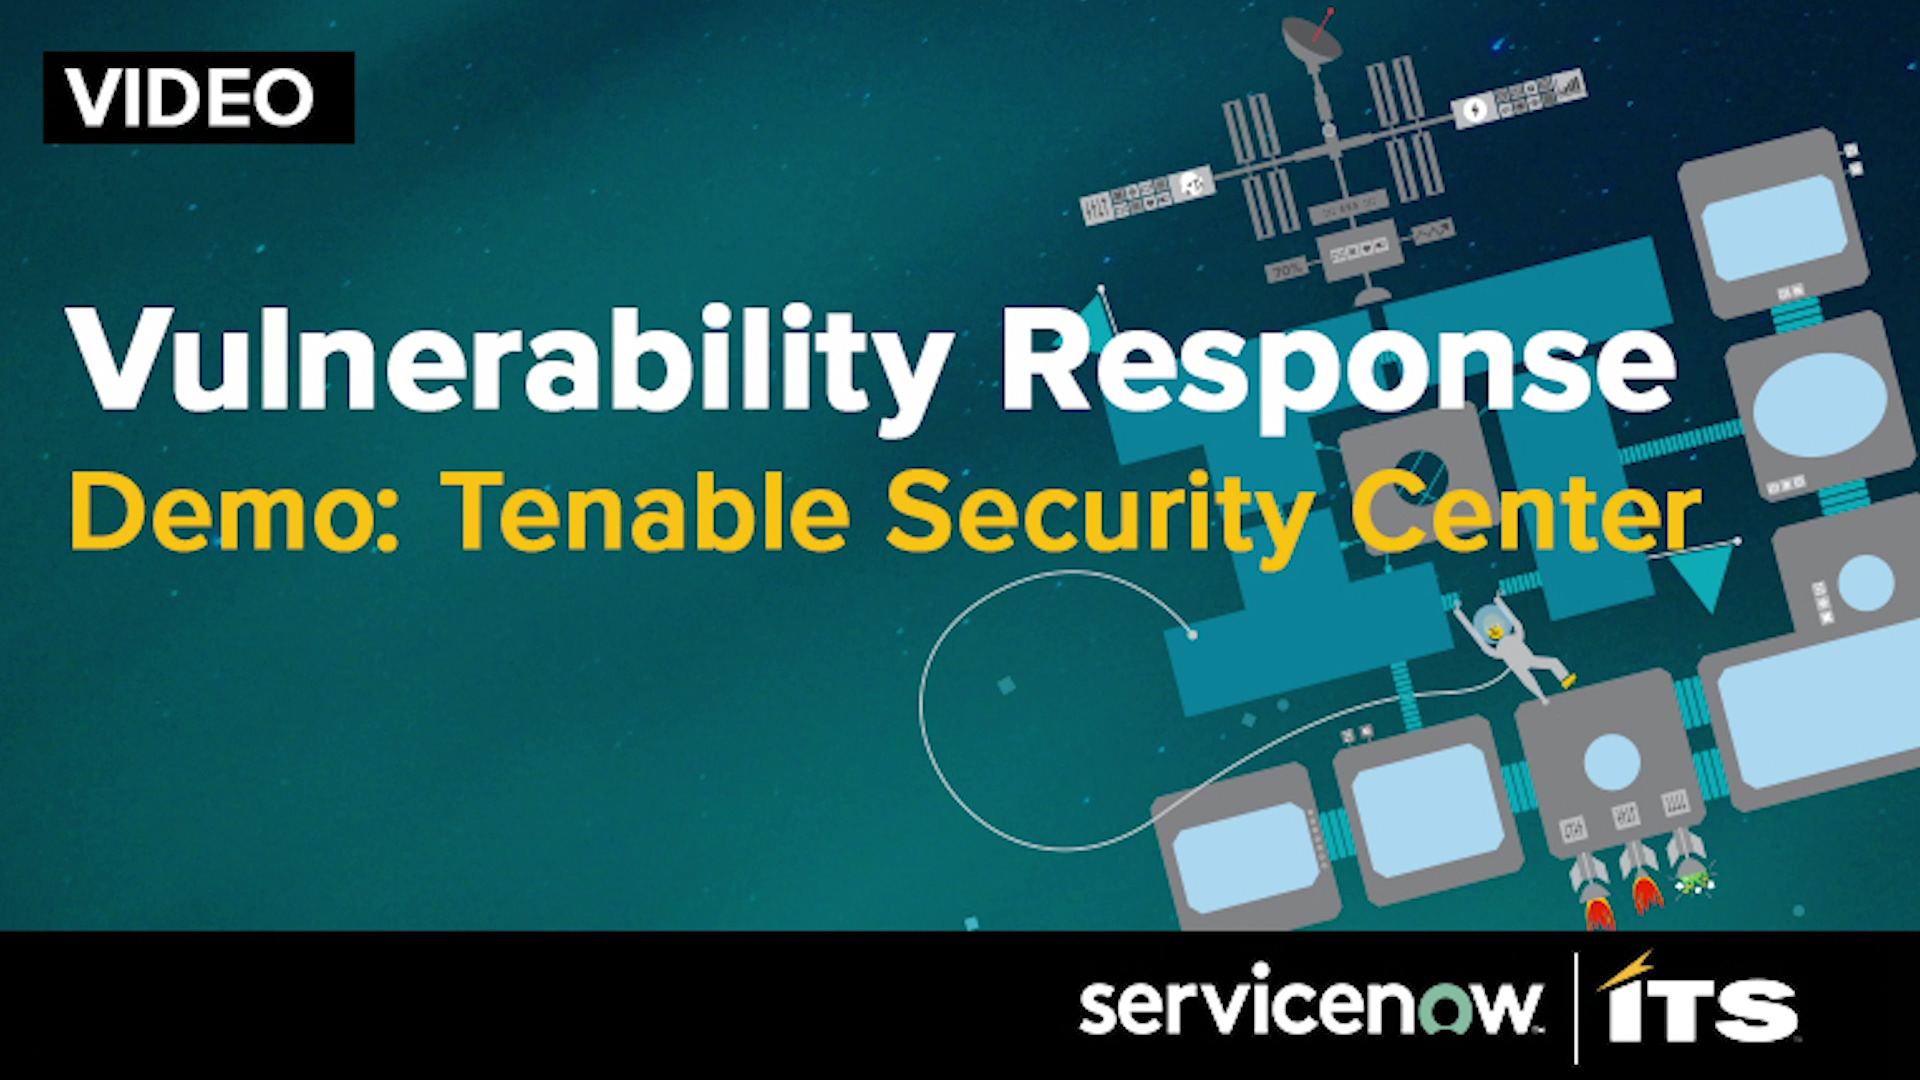 Vulnerabiltiy Response - Tenable Security Center Demo